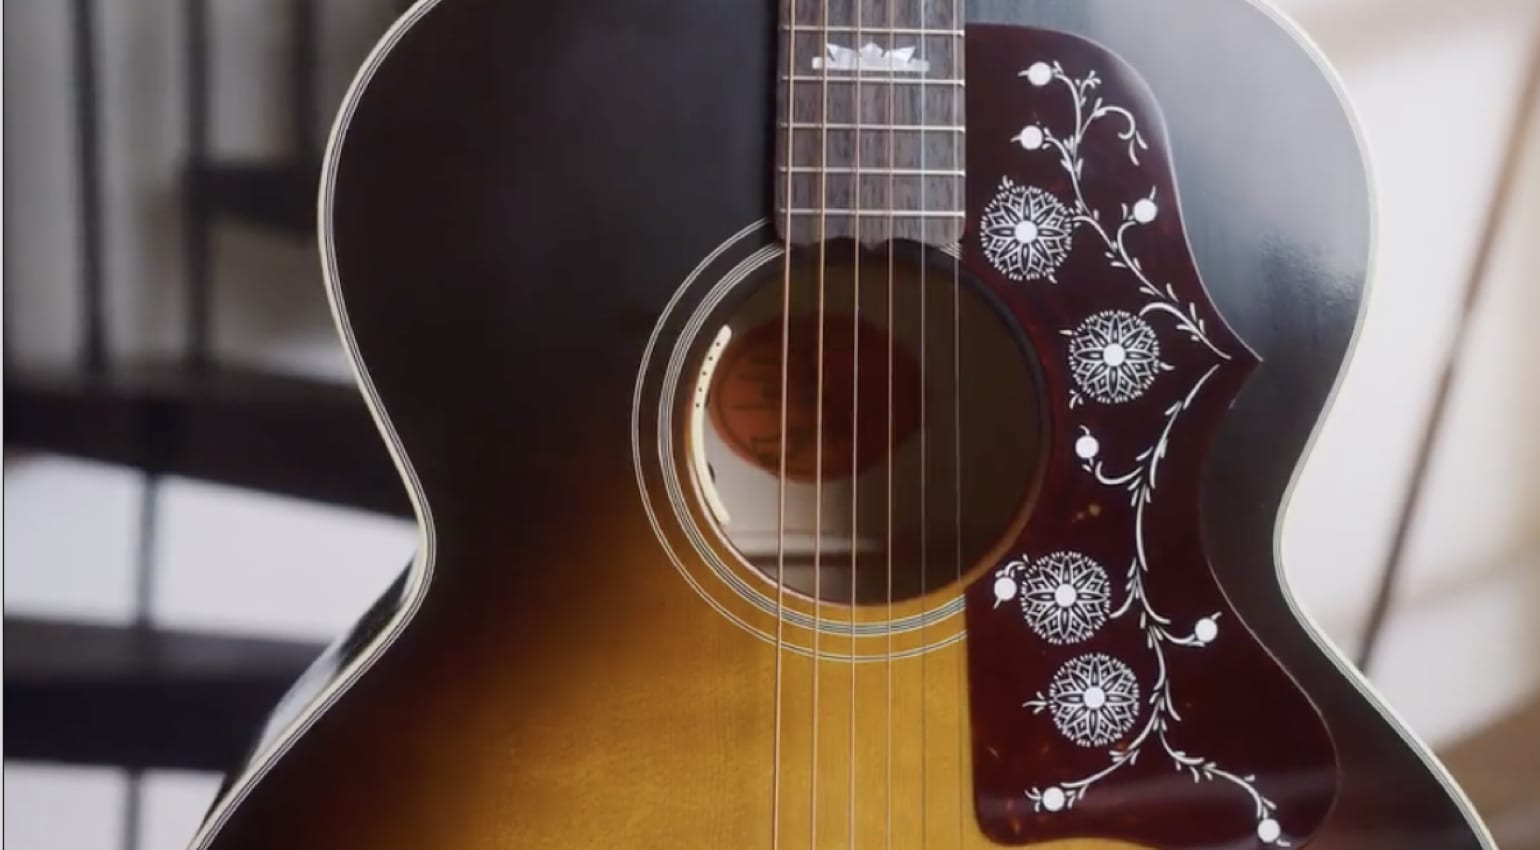 Gibson J-150 teased by Noel Gallagher on Instagram